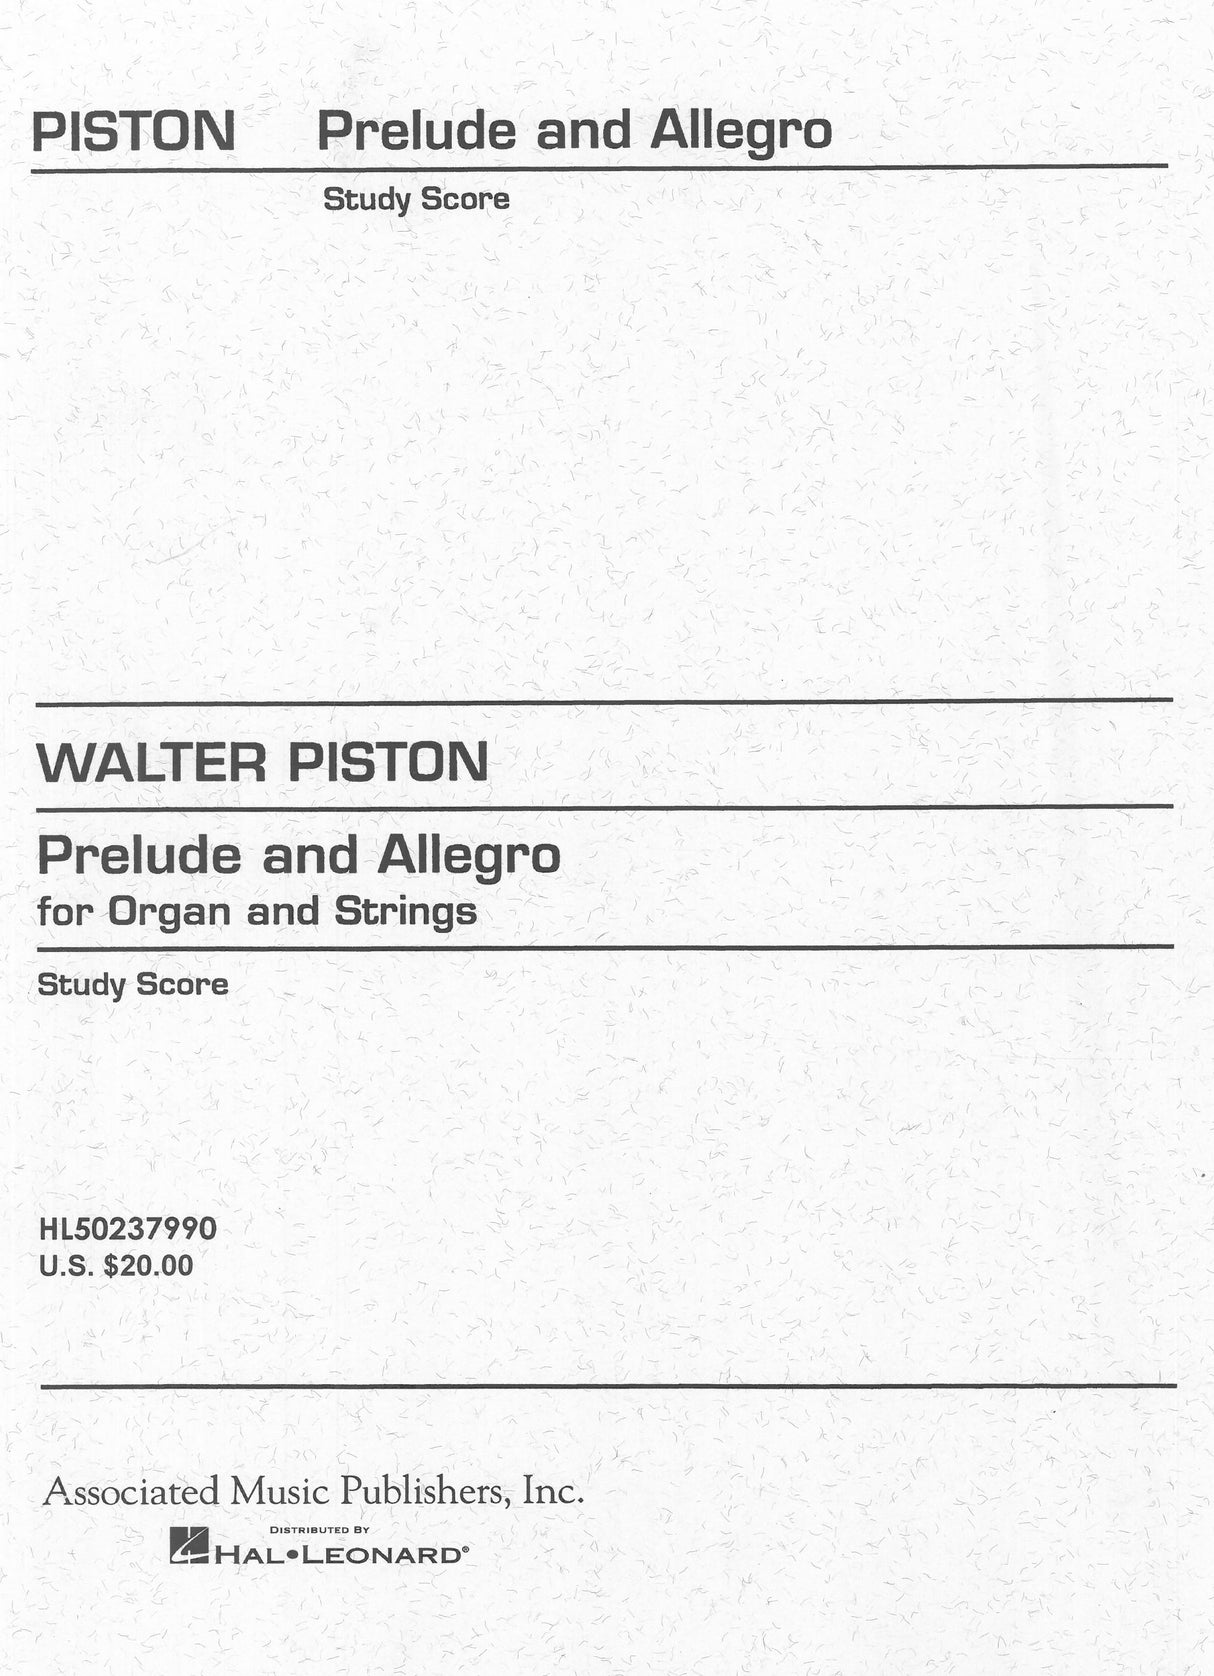 Piston: Prelude & Allegro